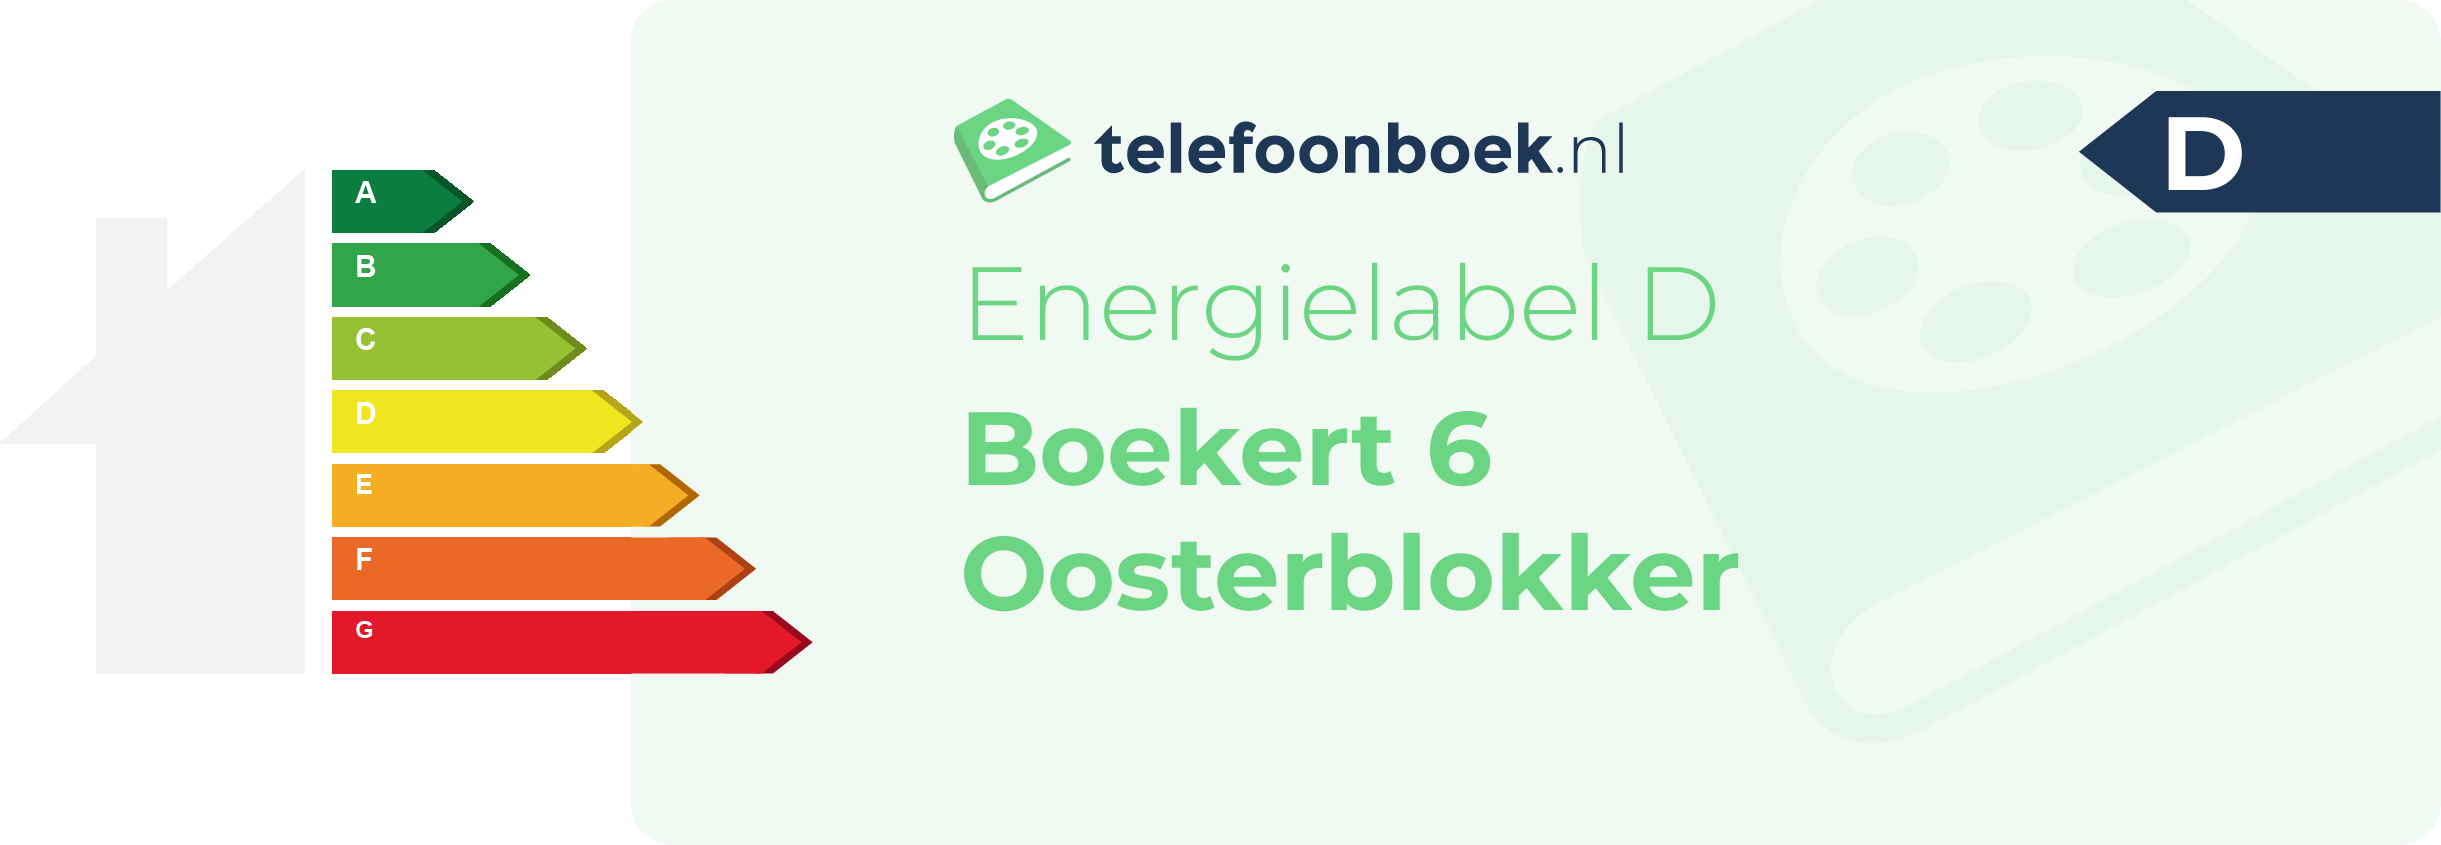 Energielabel Boekert 6 Oosterblokker